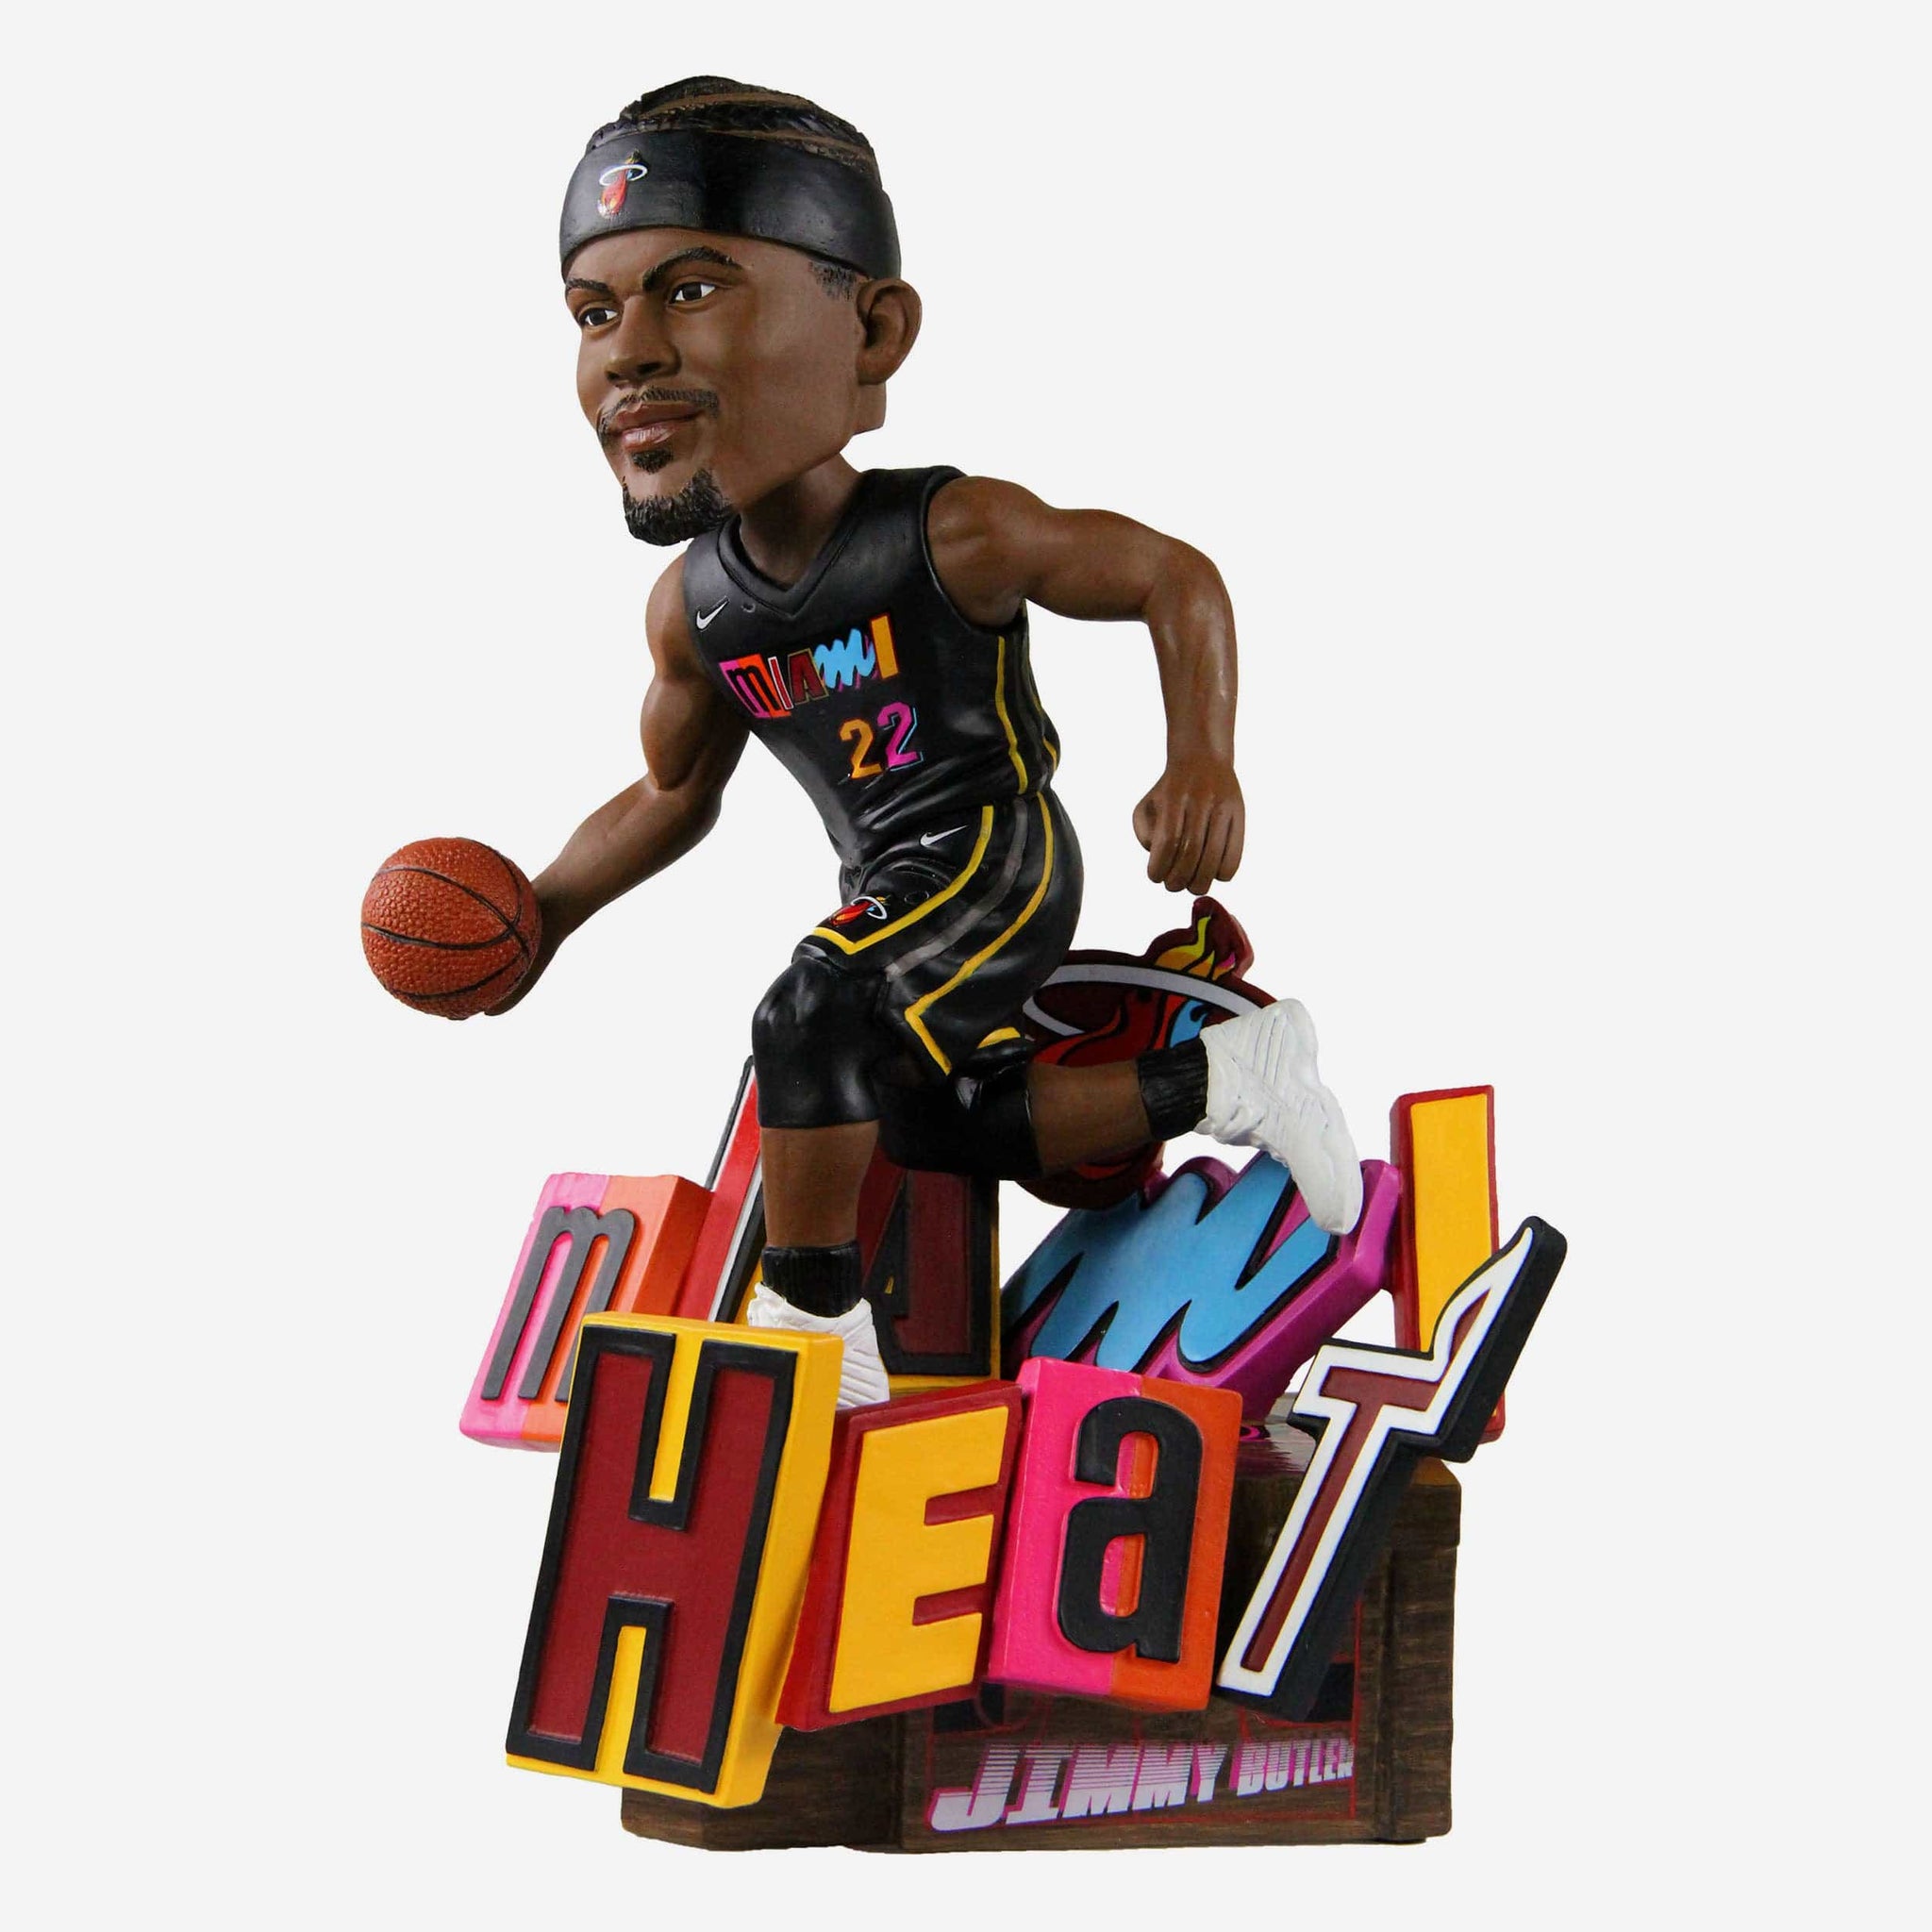 RESTOCK ALERT!!! Jimmy Butler Miami Heat Authentic City Edition